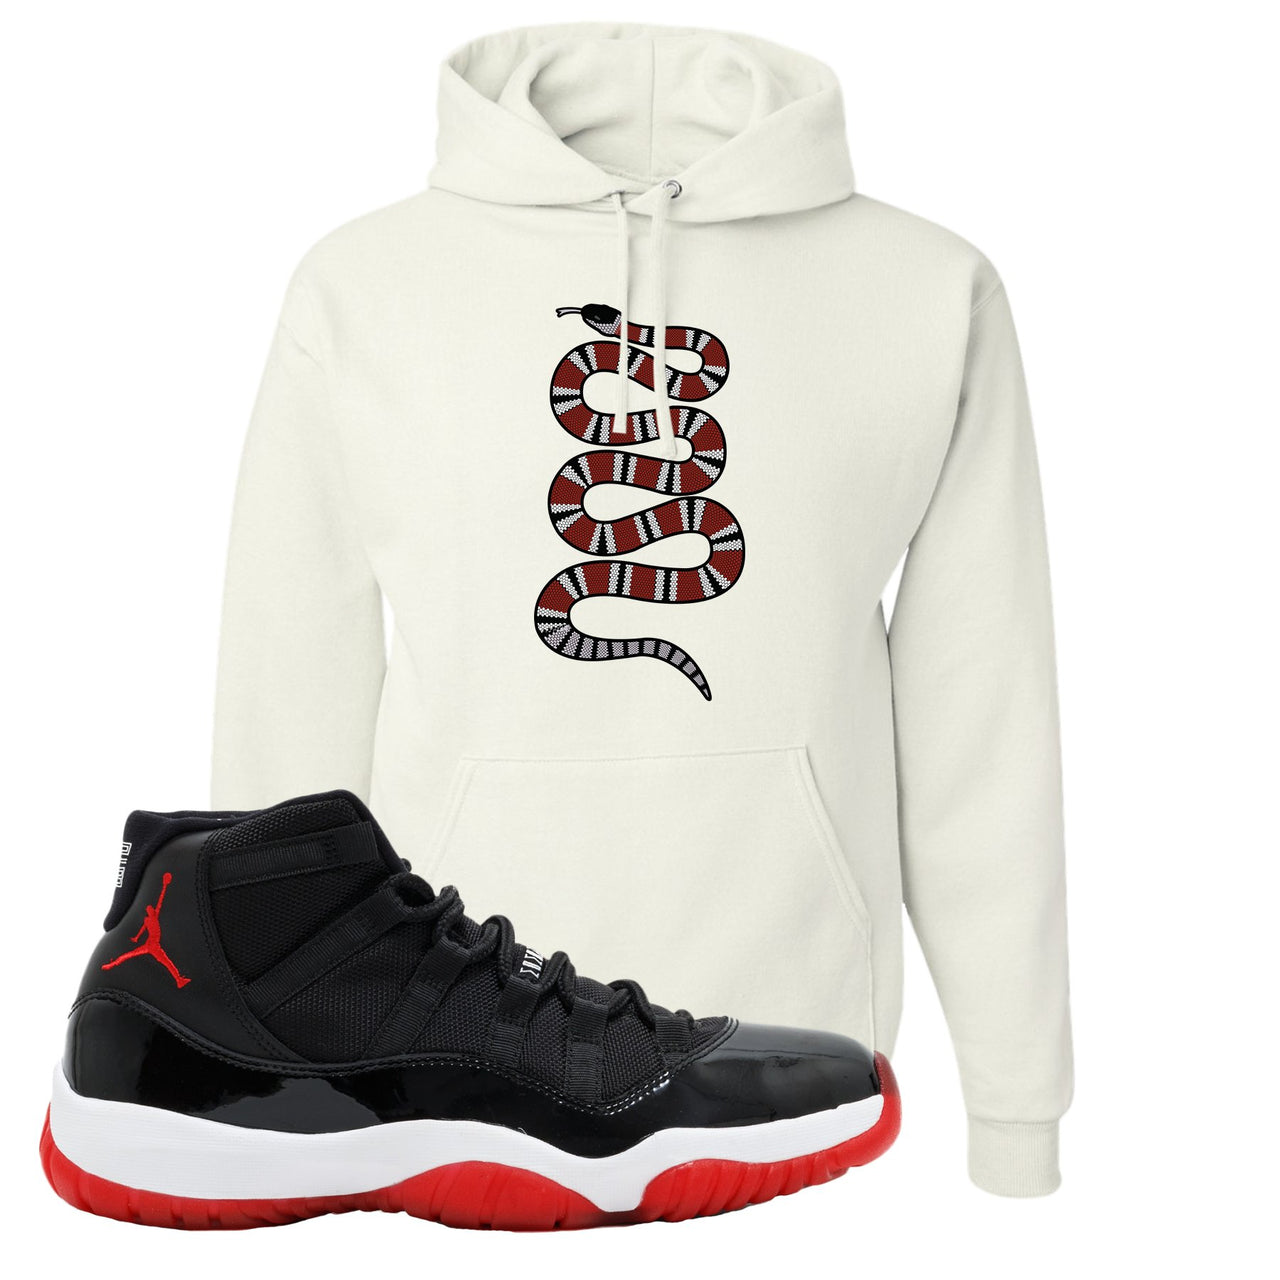 Jordan 11 Bred Coiled Snake White Sneaker Hook Up Pullover Hoodie